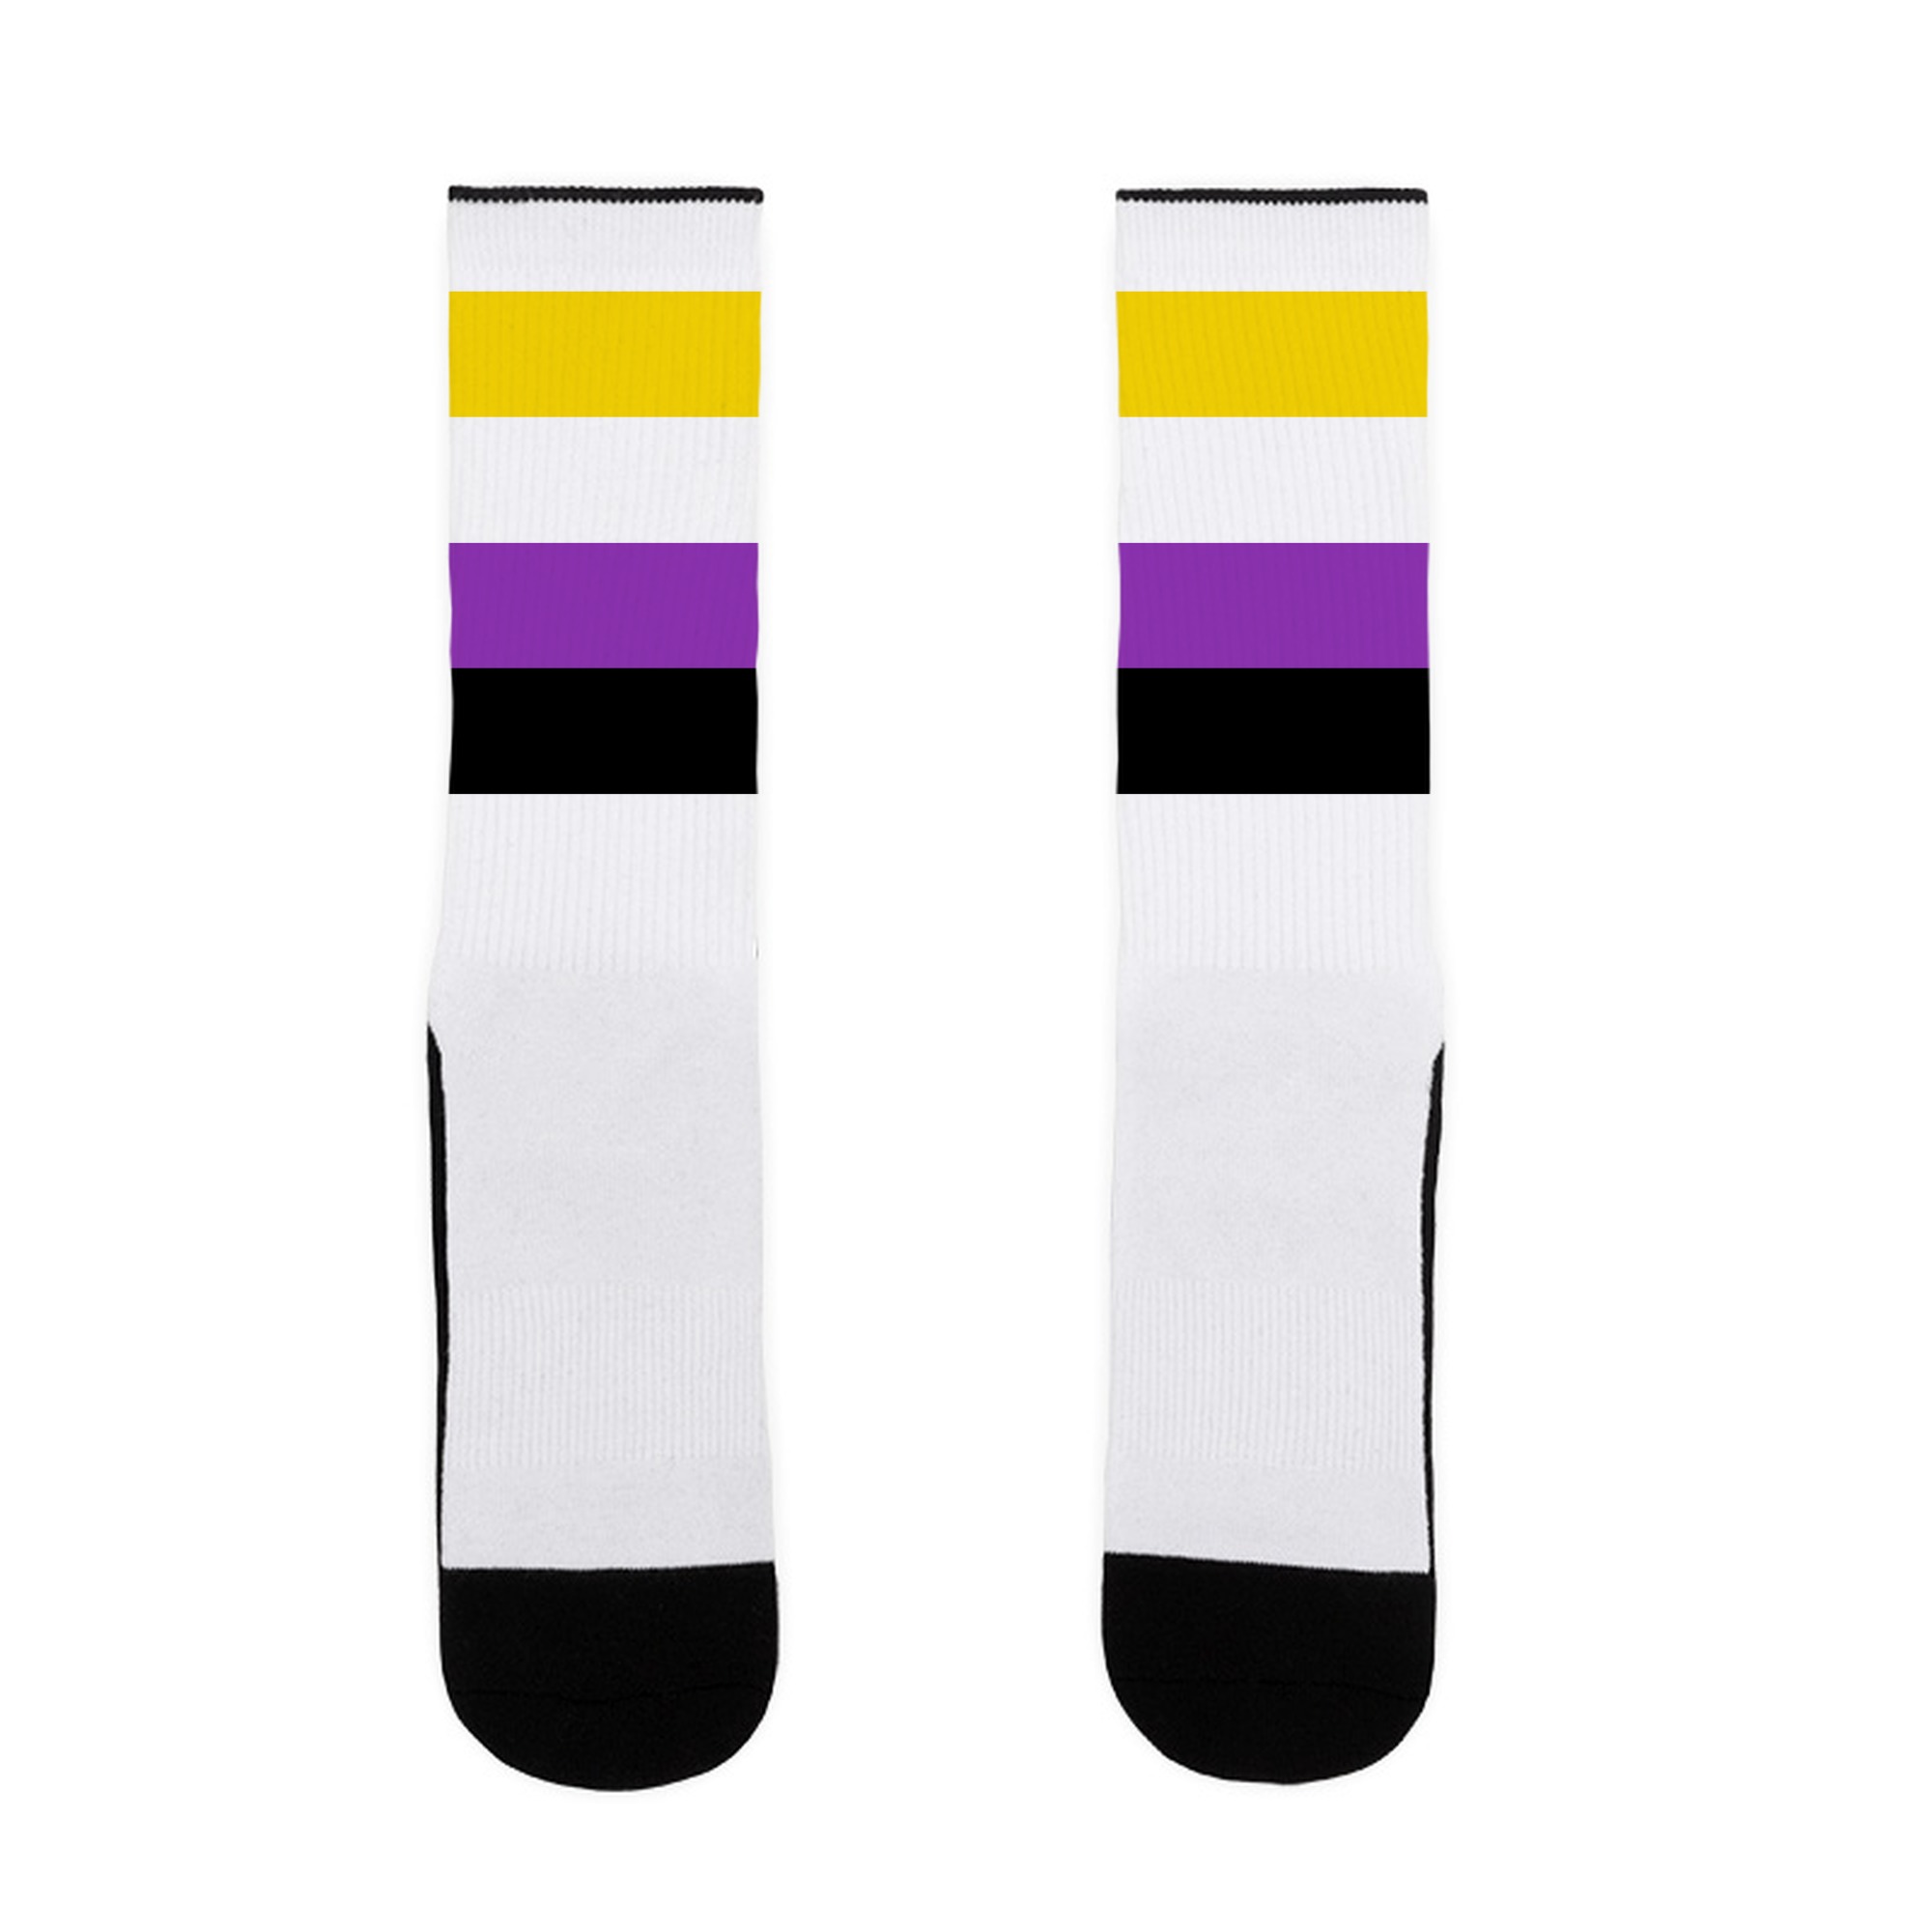 Non-binary Flag Socks  ENBY Pride Socks  LGBTQ Accesories  LGBT Socks